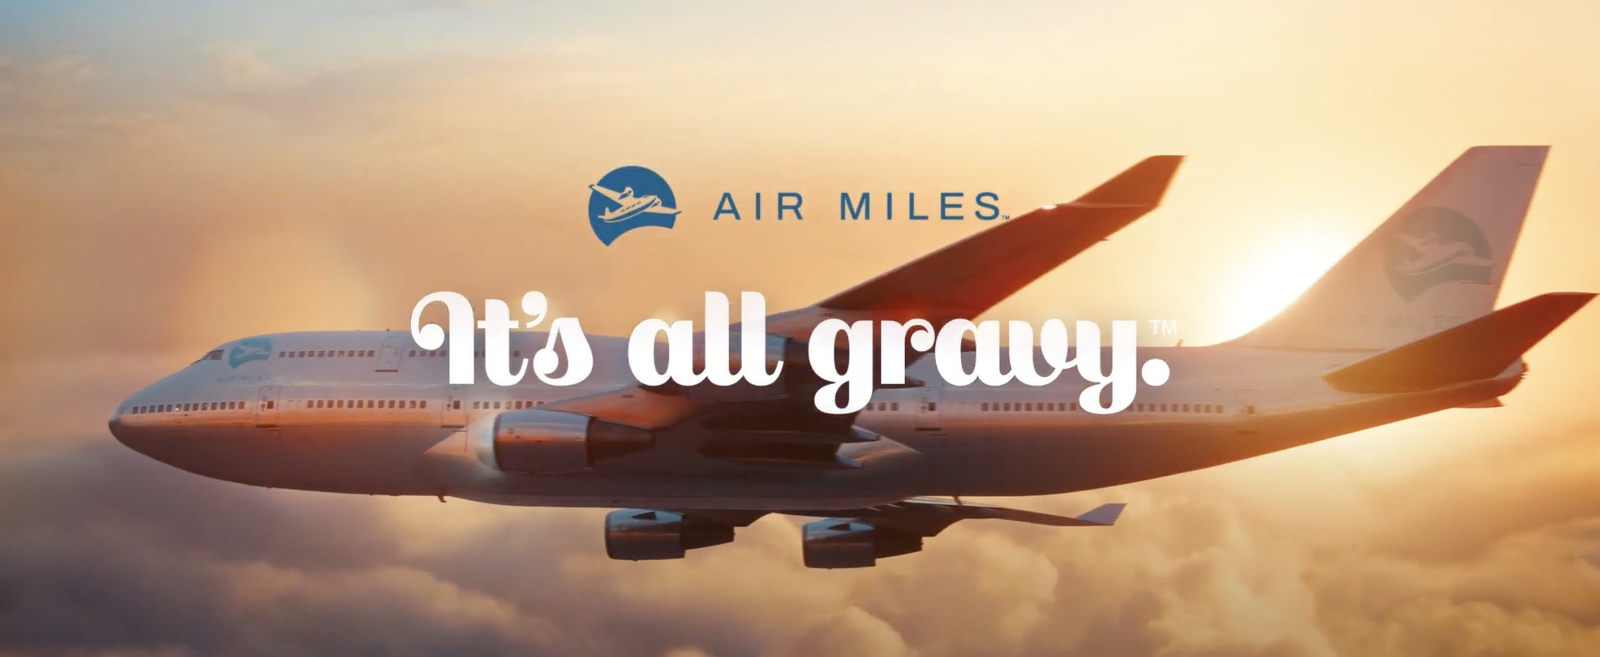 Air Miles It's all gravy